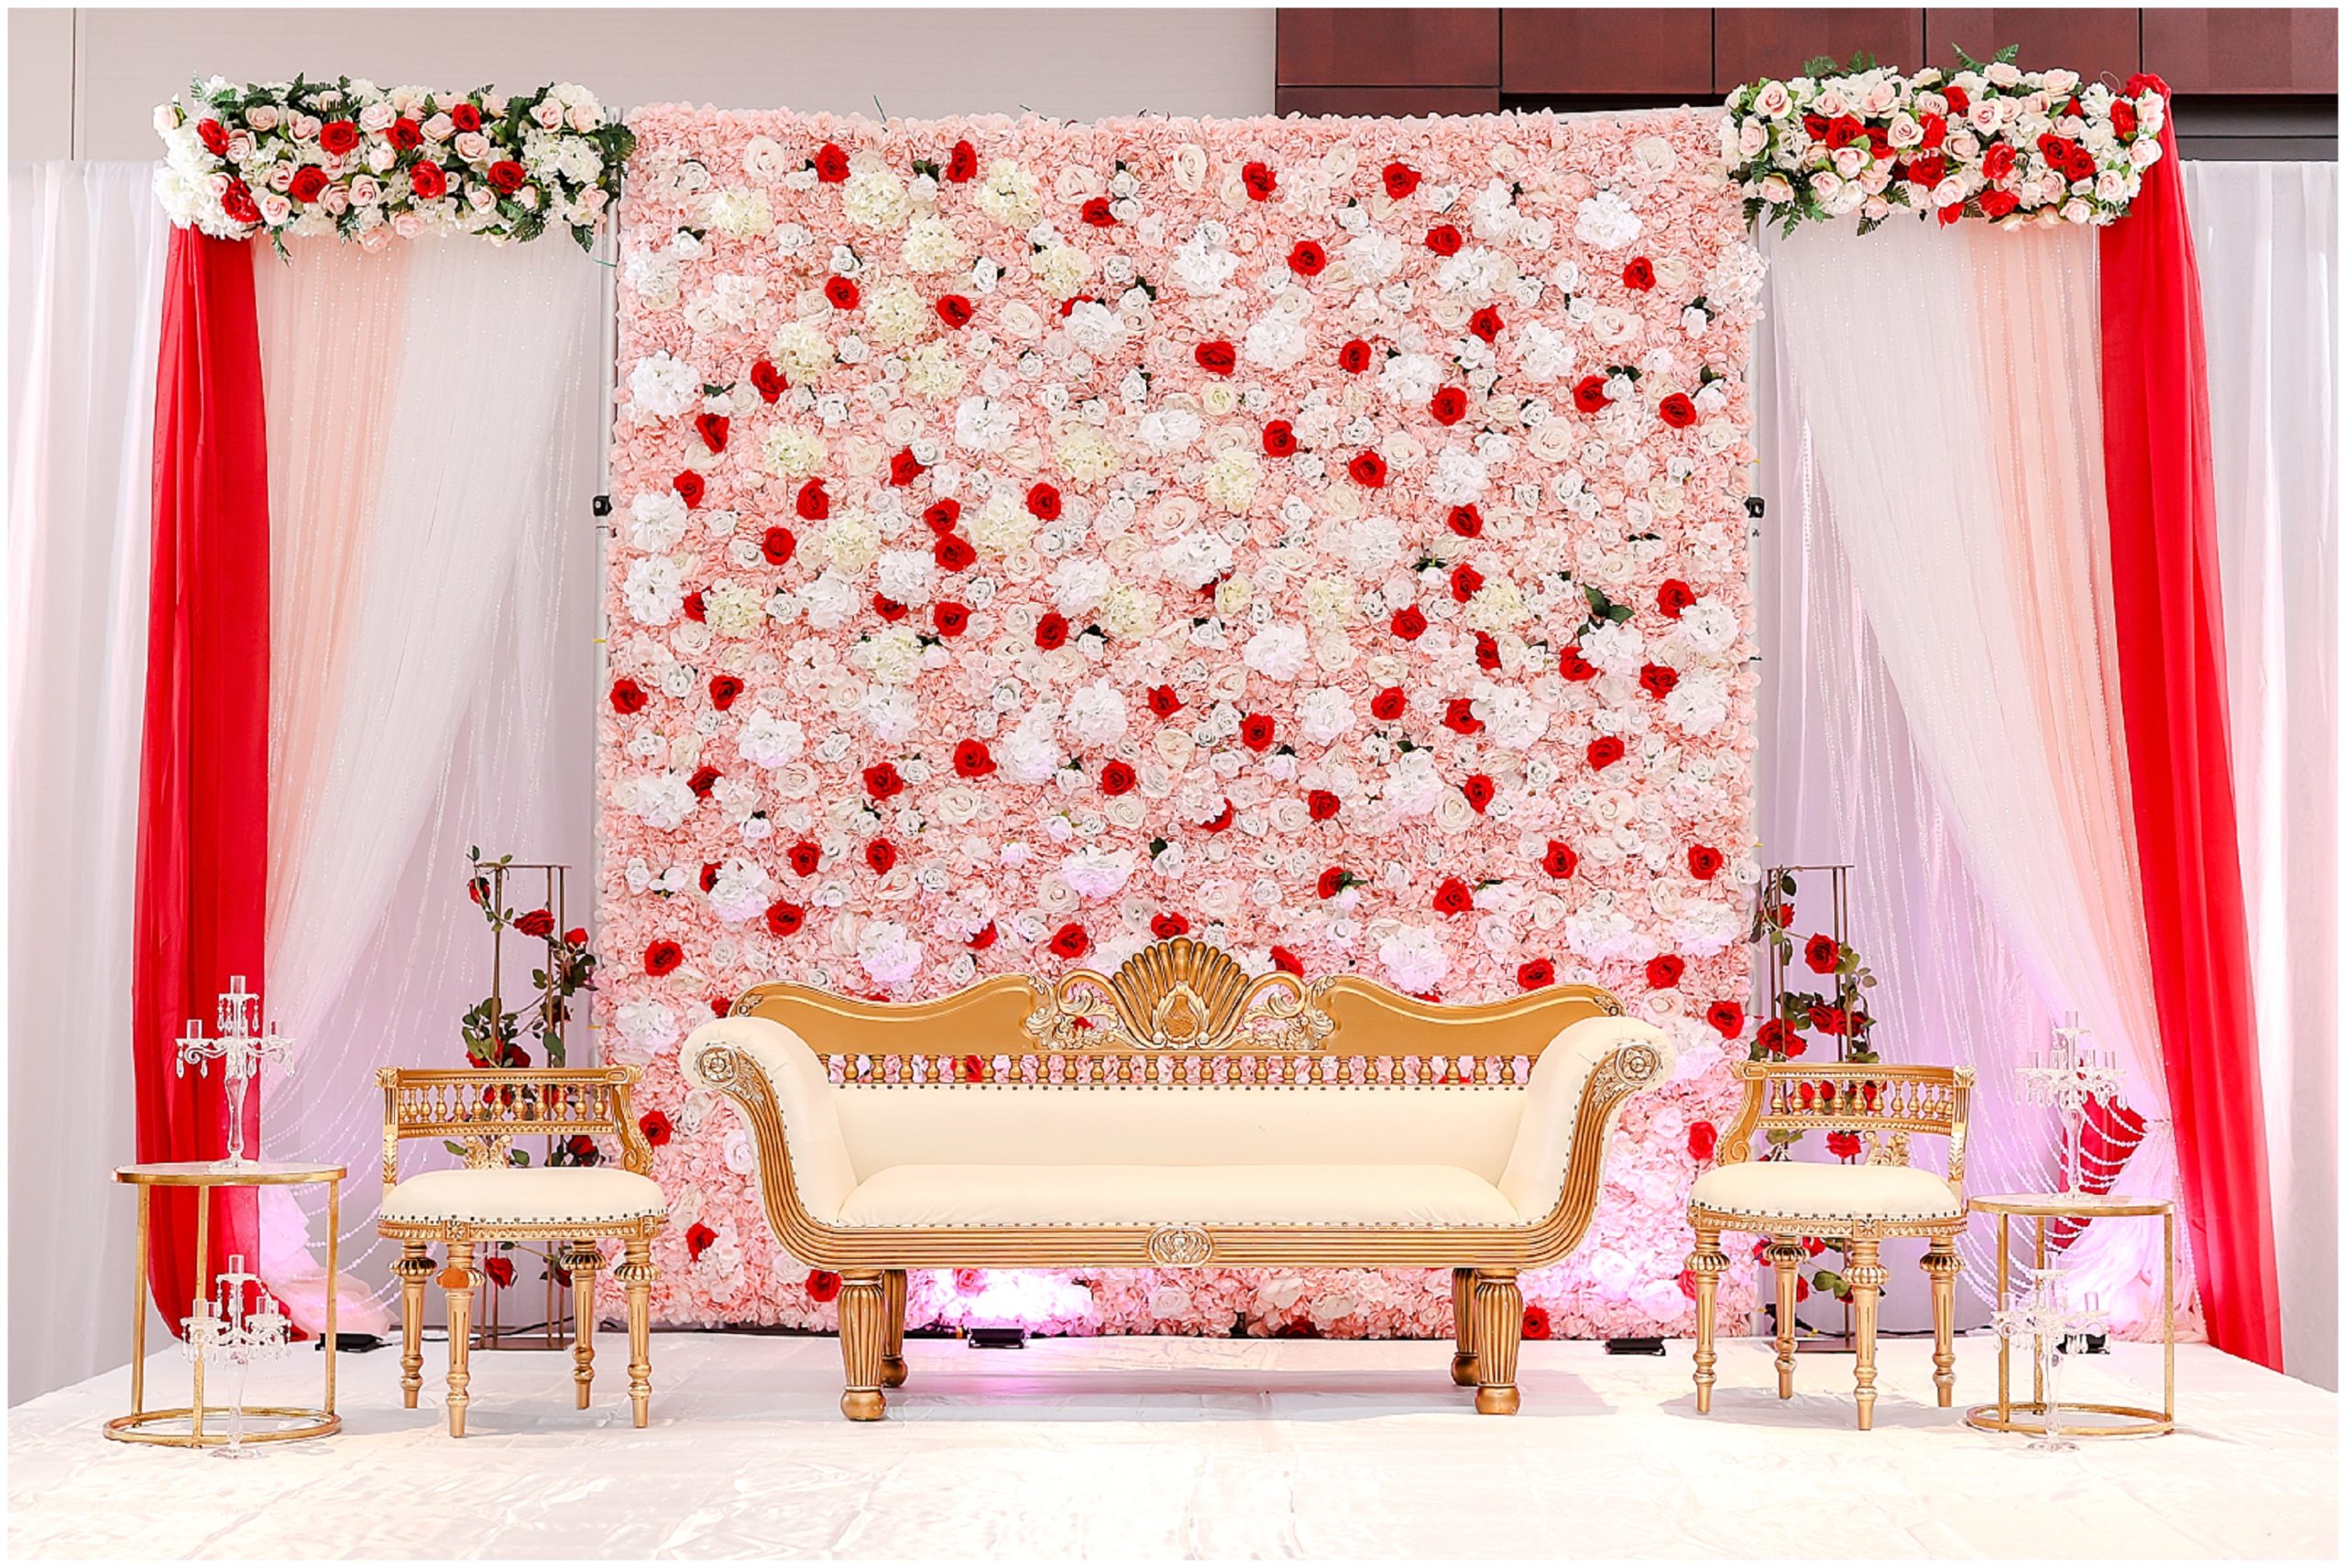 wedding stage indian muslim wedding - pakistani wedding decor - stage ideas